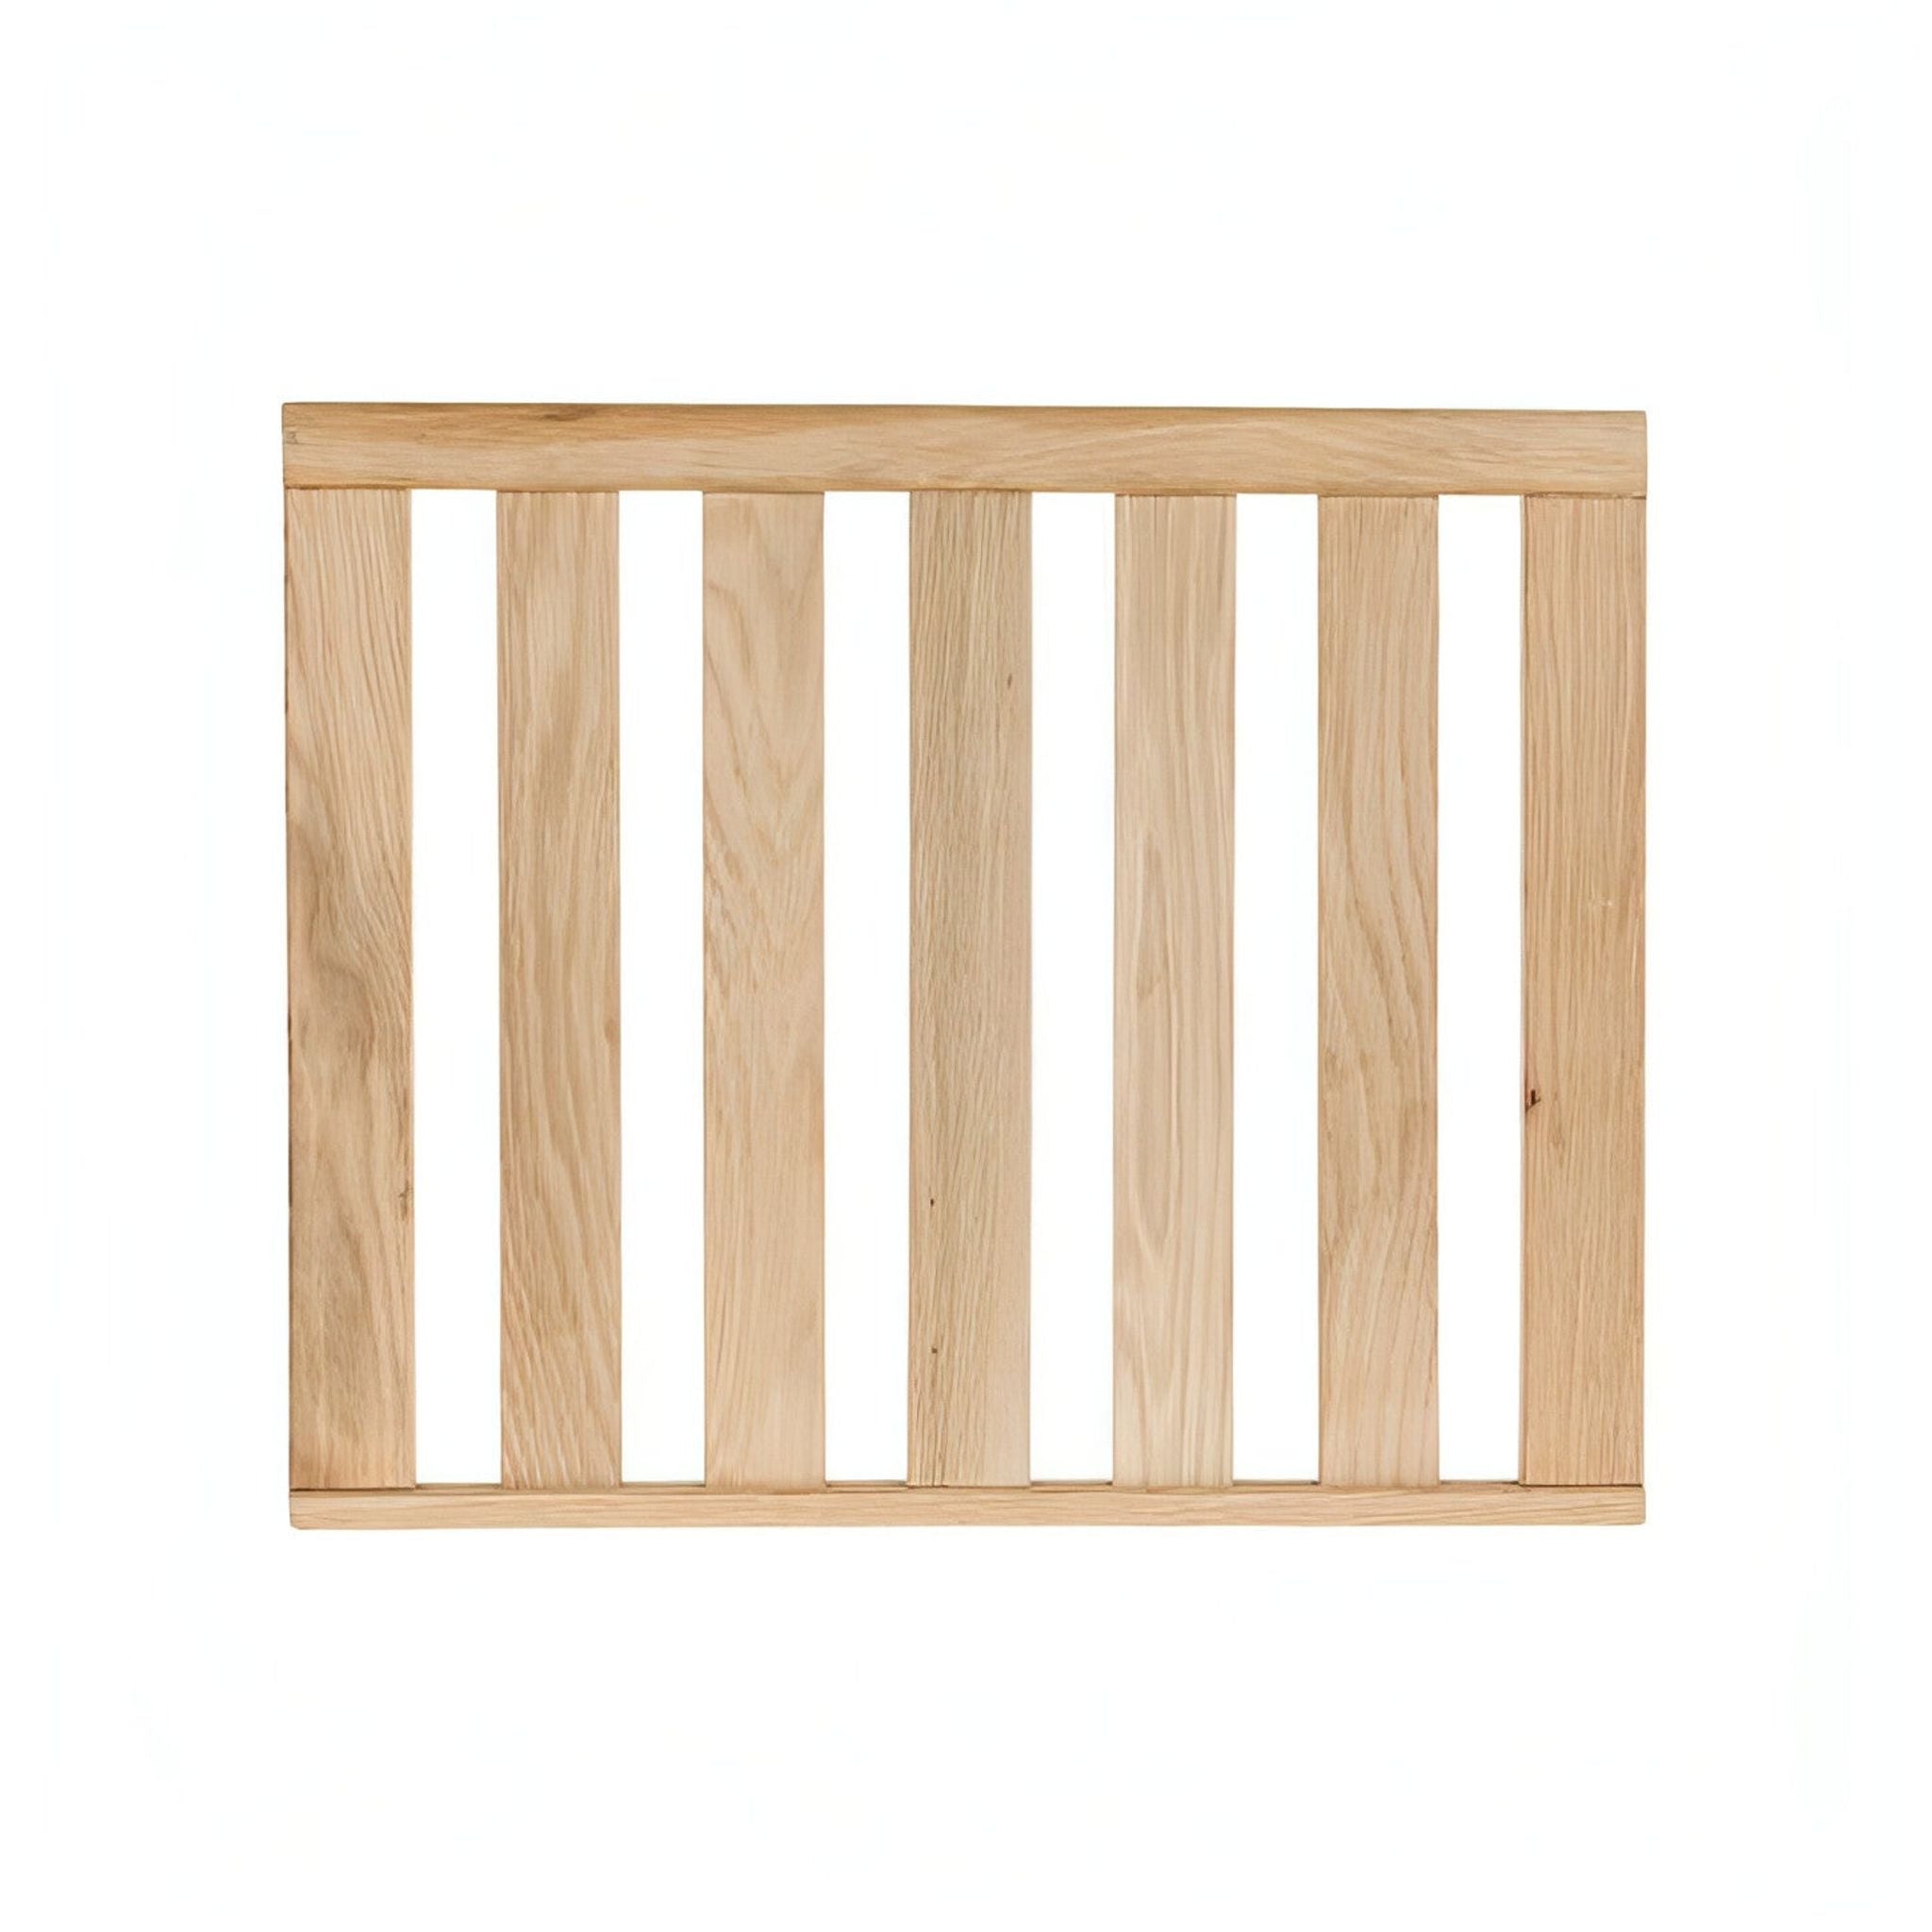 CLAVIP01 Wooden Shelf